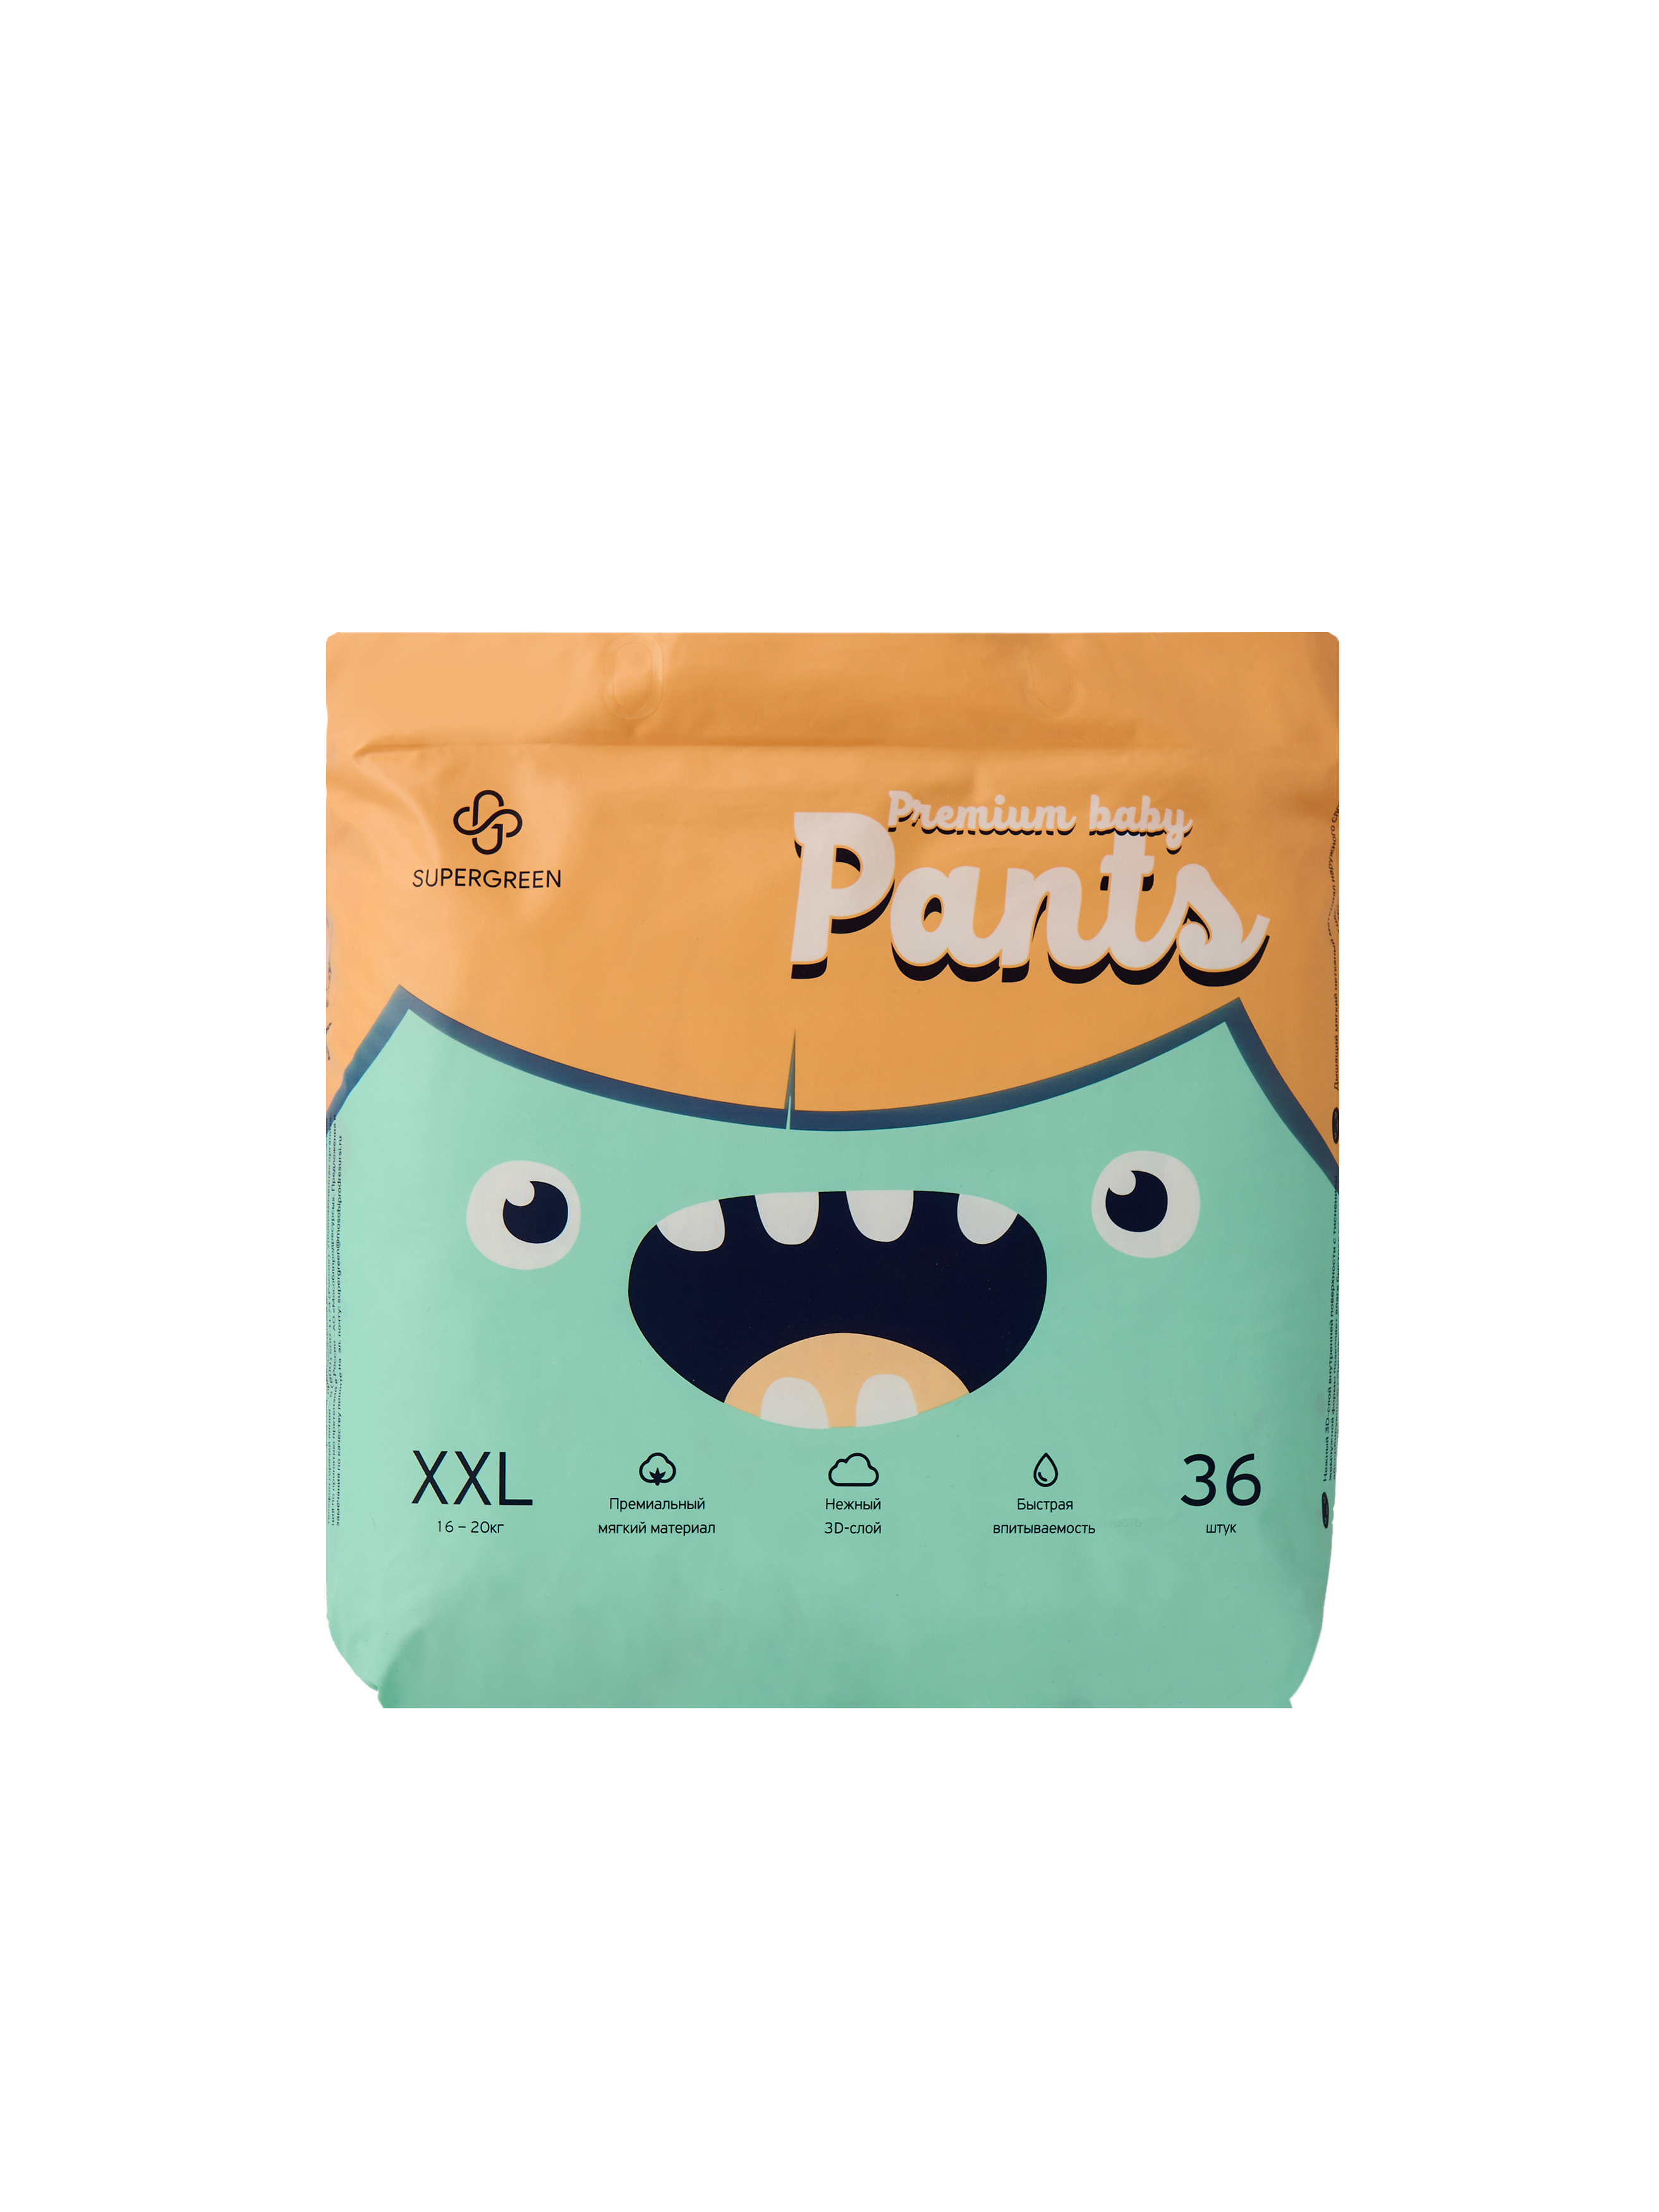 Подгузники-трусики детские SUPERGREEN Premium baby Pants, XXL (16-20 кг) 36 шт.